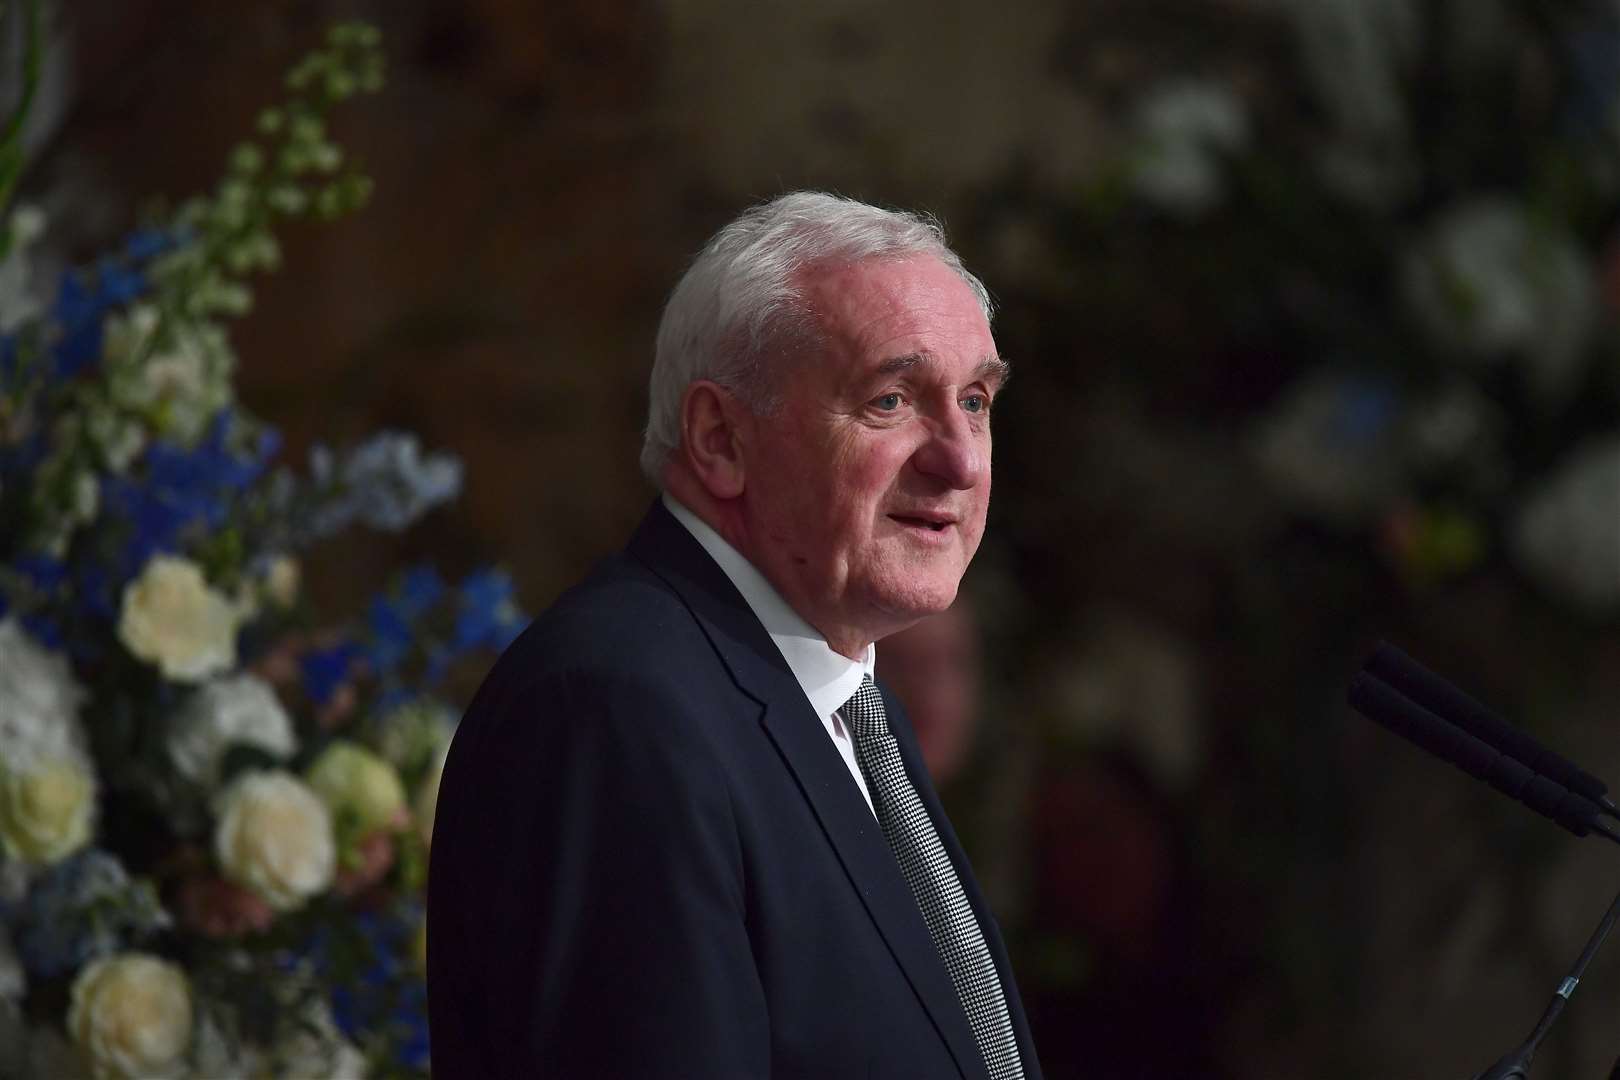 Former Taoiseach Bertie Ahern gives a speech during a gala dinner at Hillsborough Castle, Co Down (Charles McQuillan/PA)